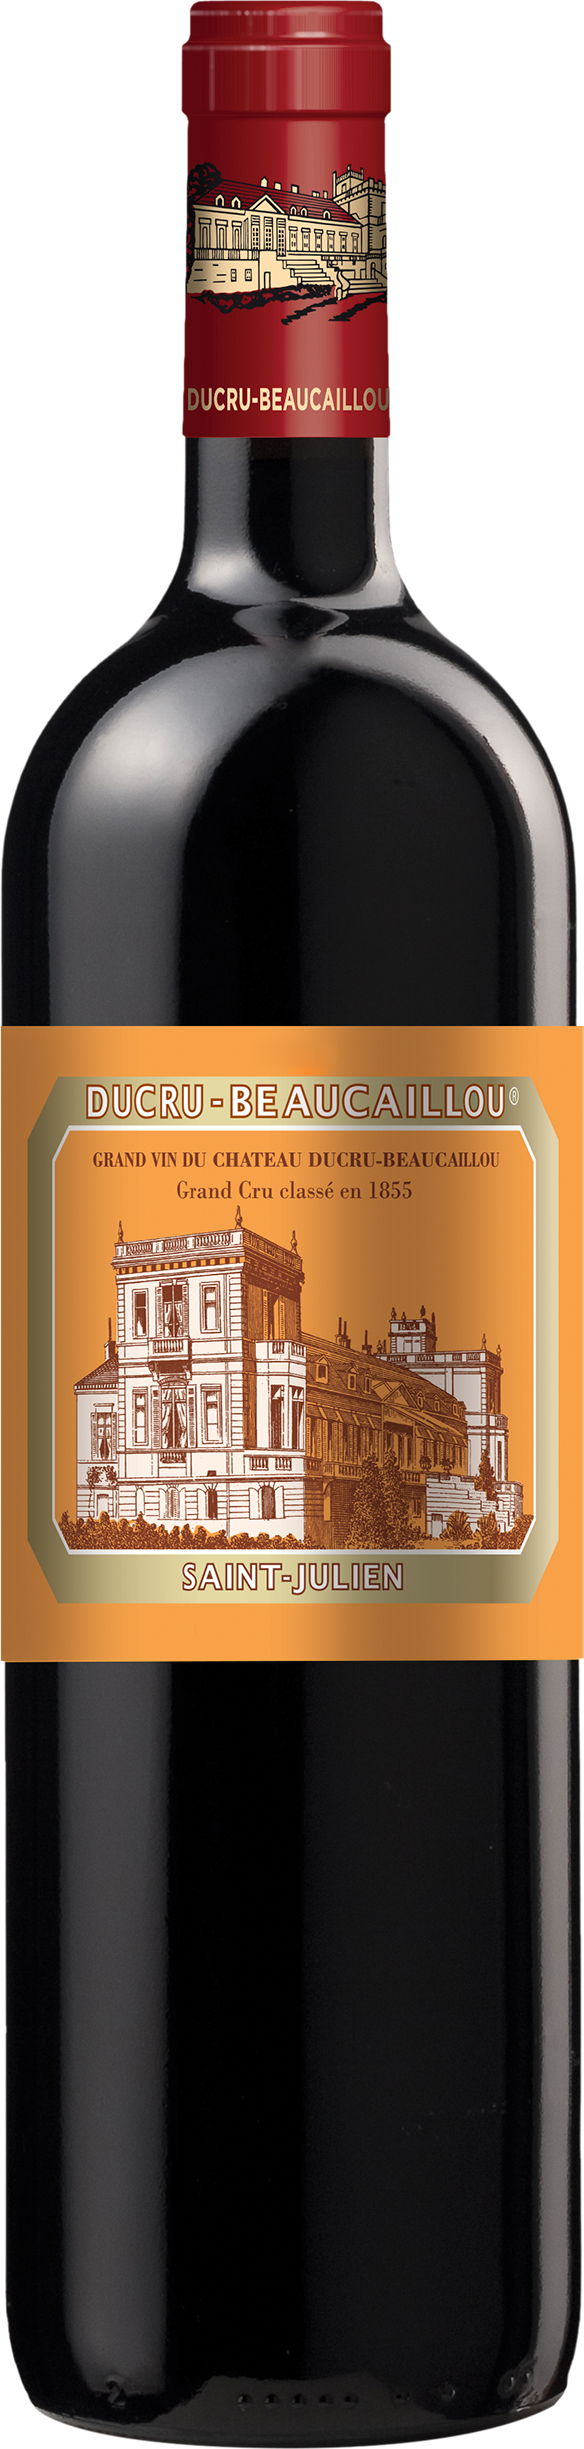 Köstlichalkoholisches - Château Ducru Beaucaillou (SUBSKRIPTION) - Onlineshop Ludwig von Kapff